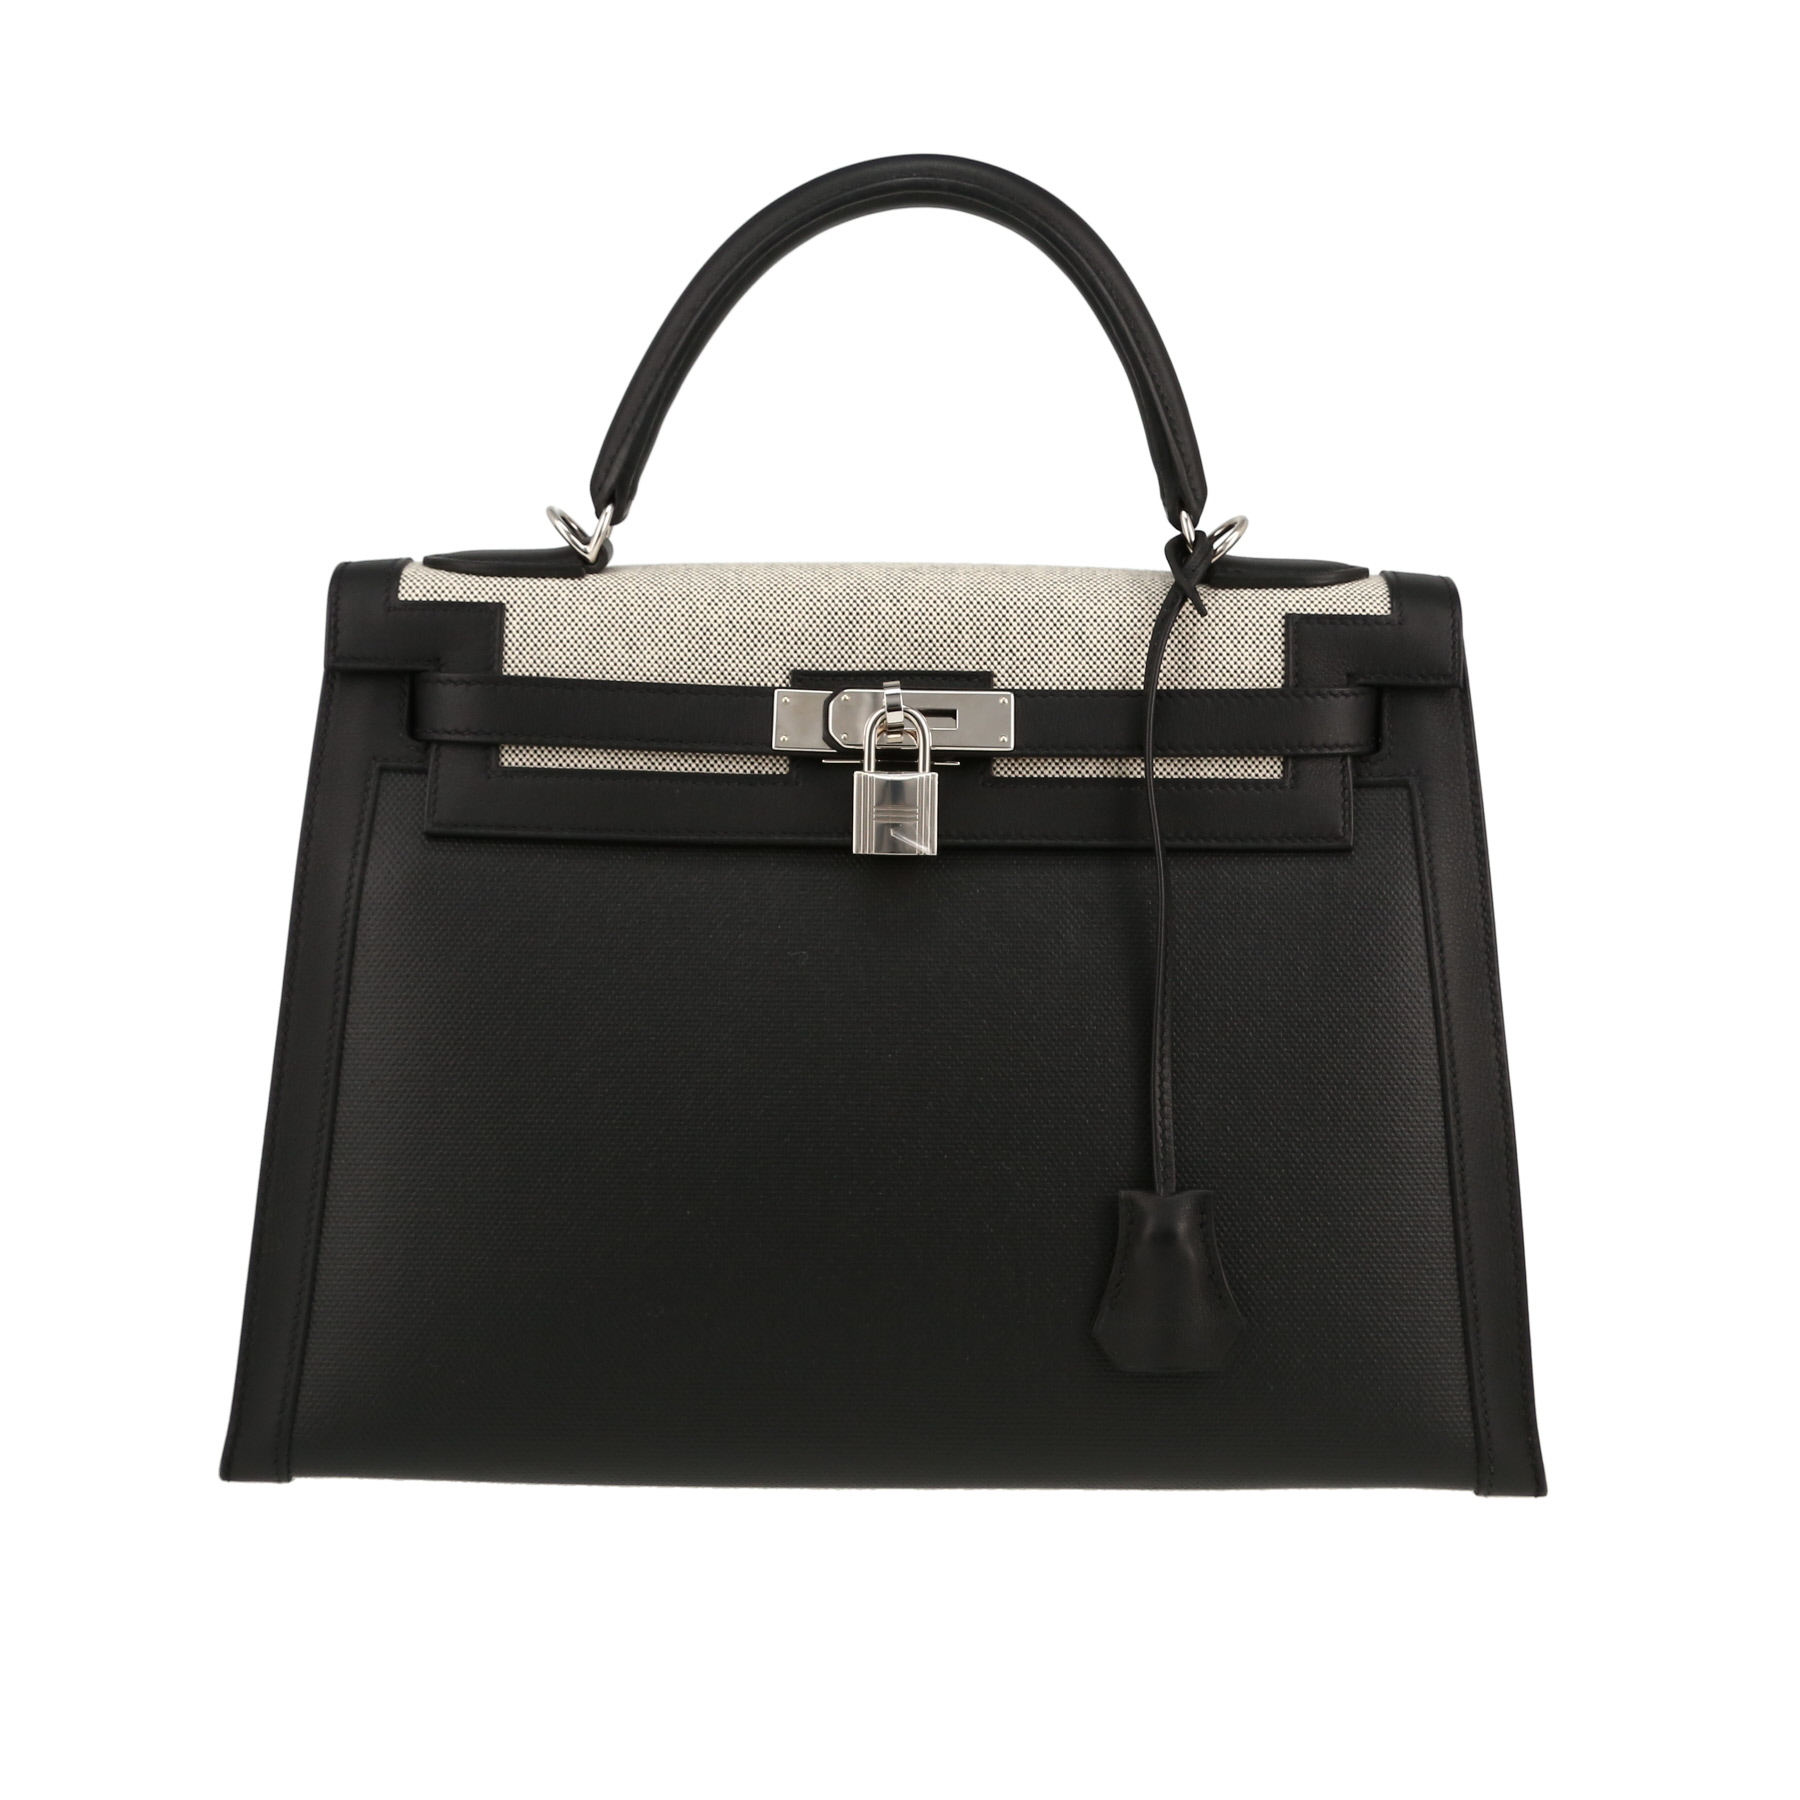 Kelly 32 cm Handbag In Black And Cream Color Canvas And